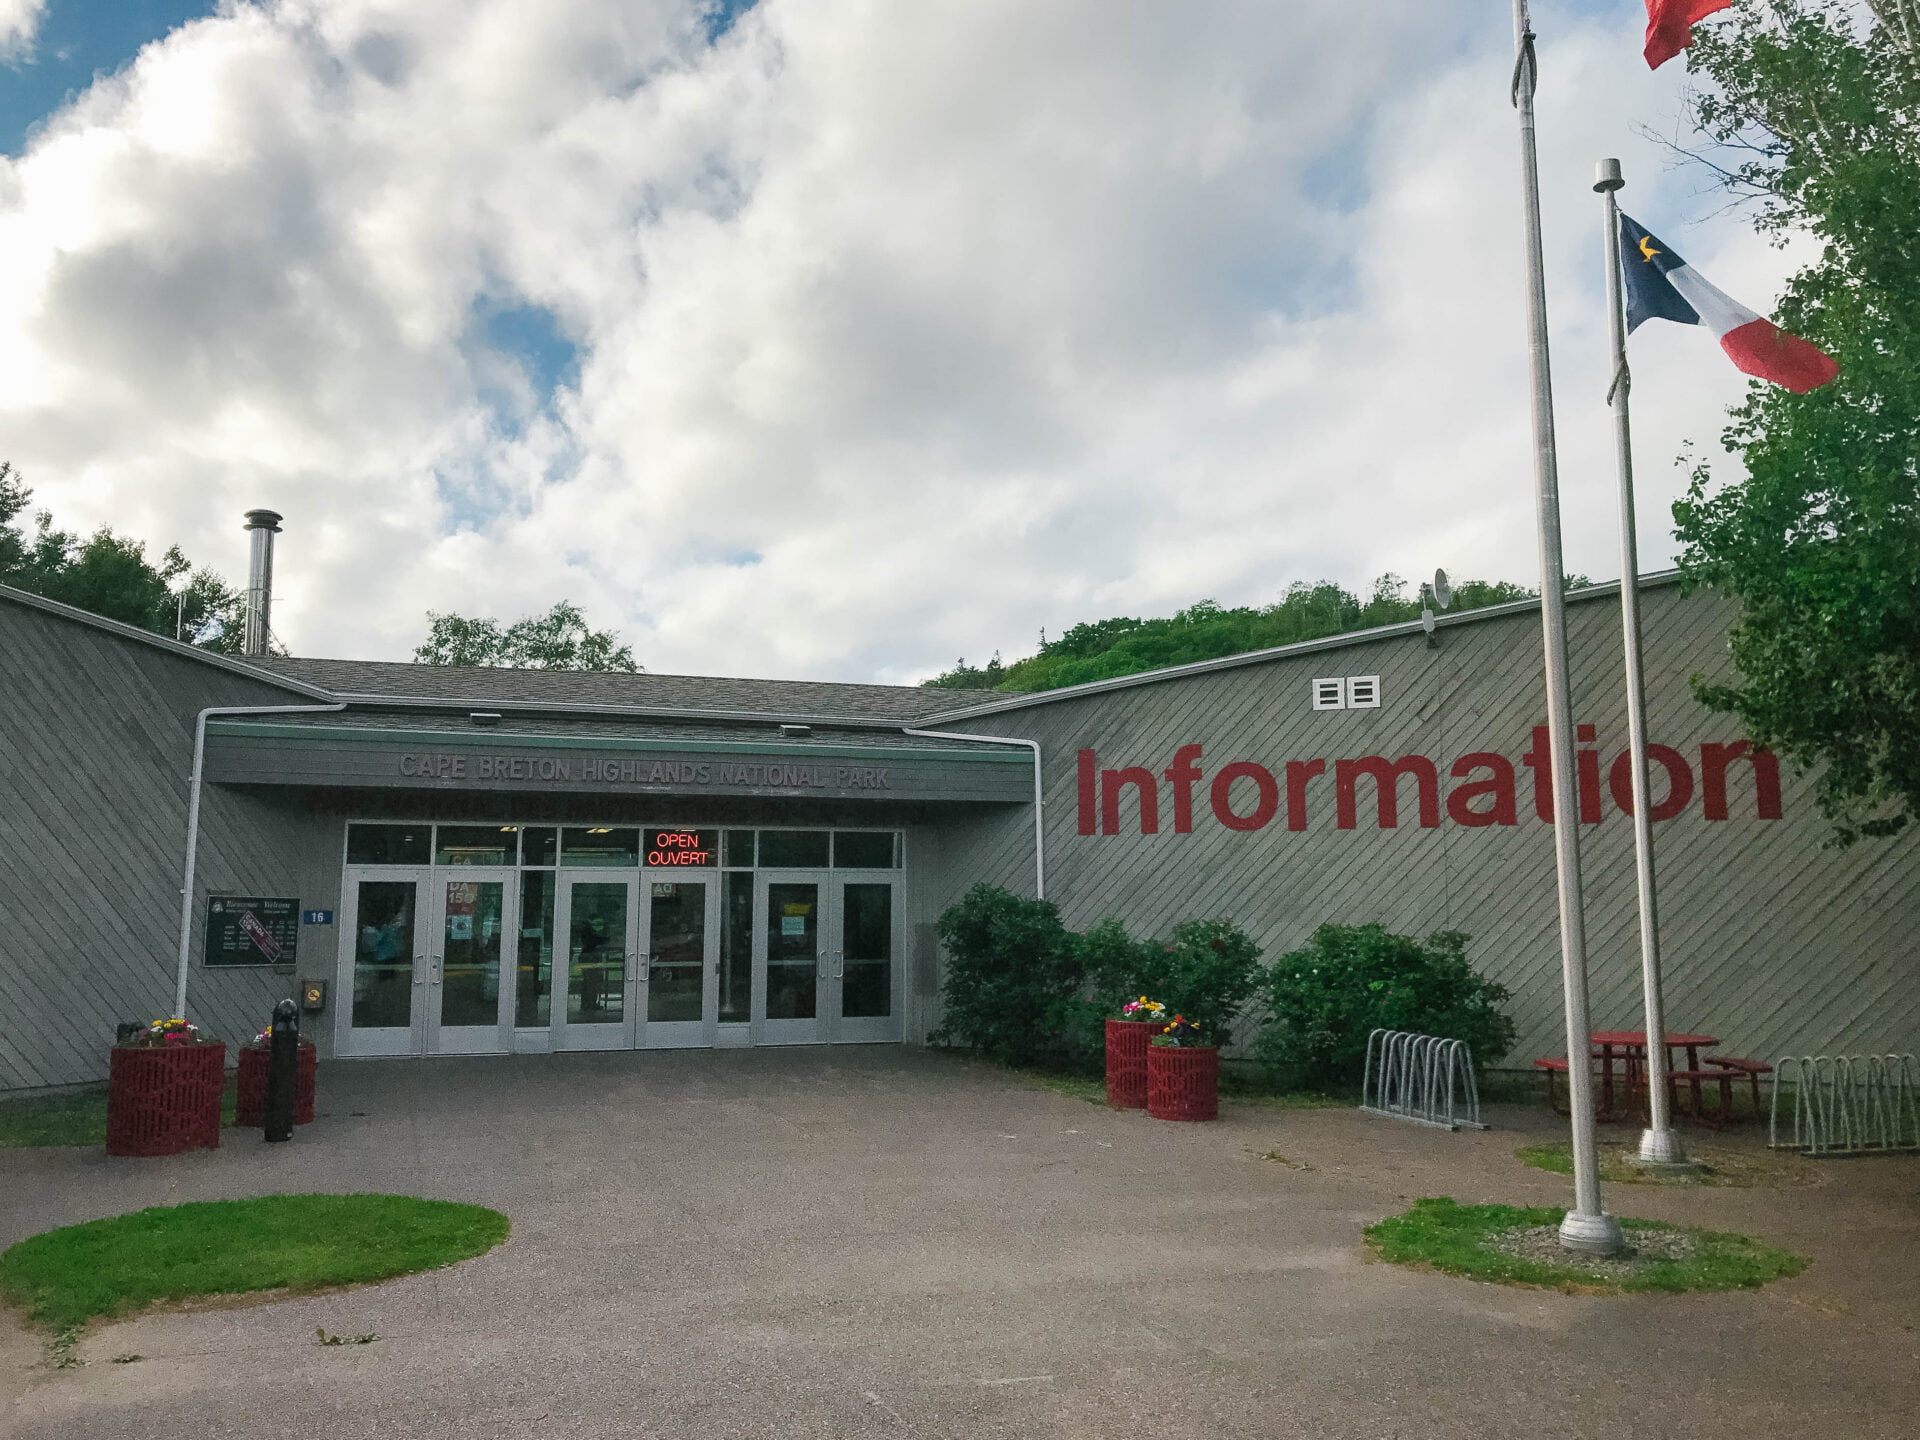 outside view of the Cape Breton Highlands vistor information centre